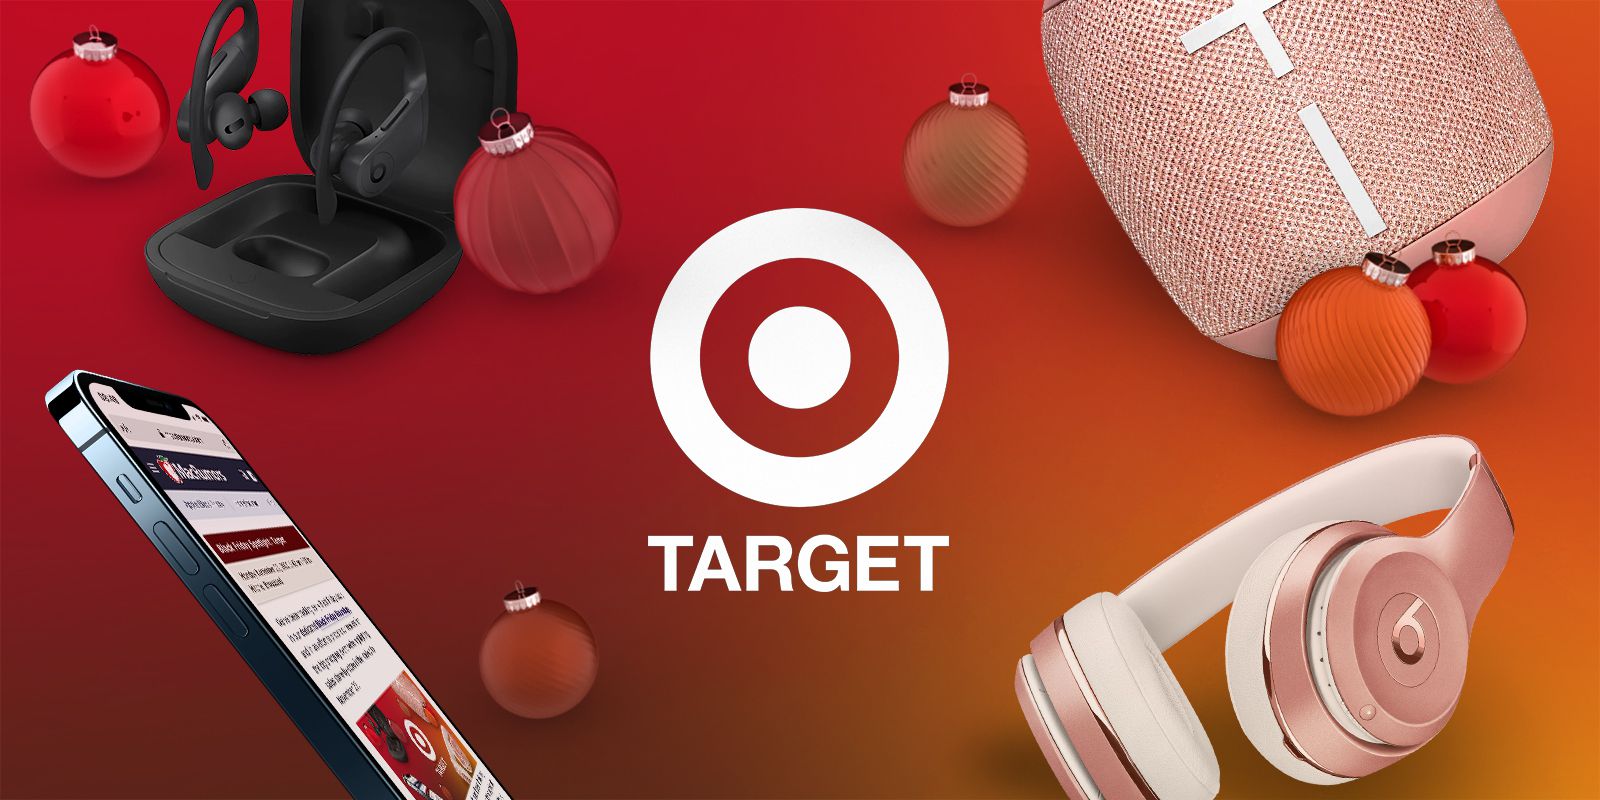 Target Reveals Black Friday Plans With Week-Long Sales Starting November 20